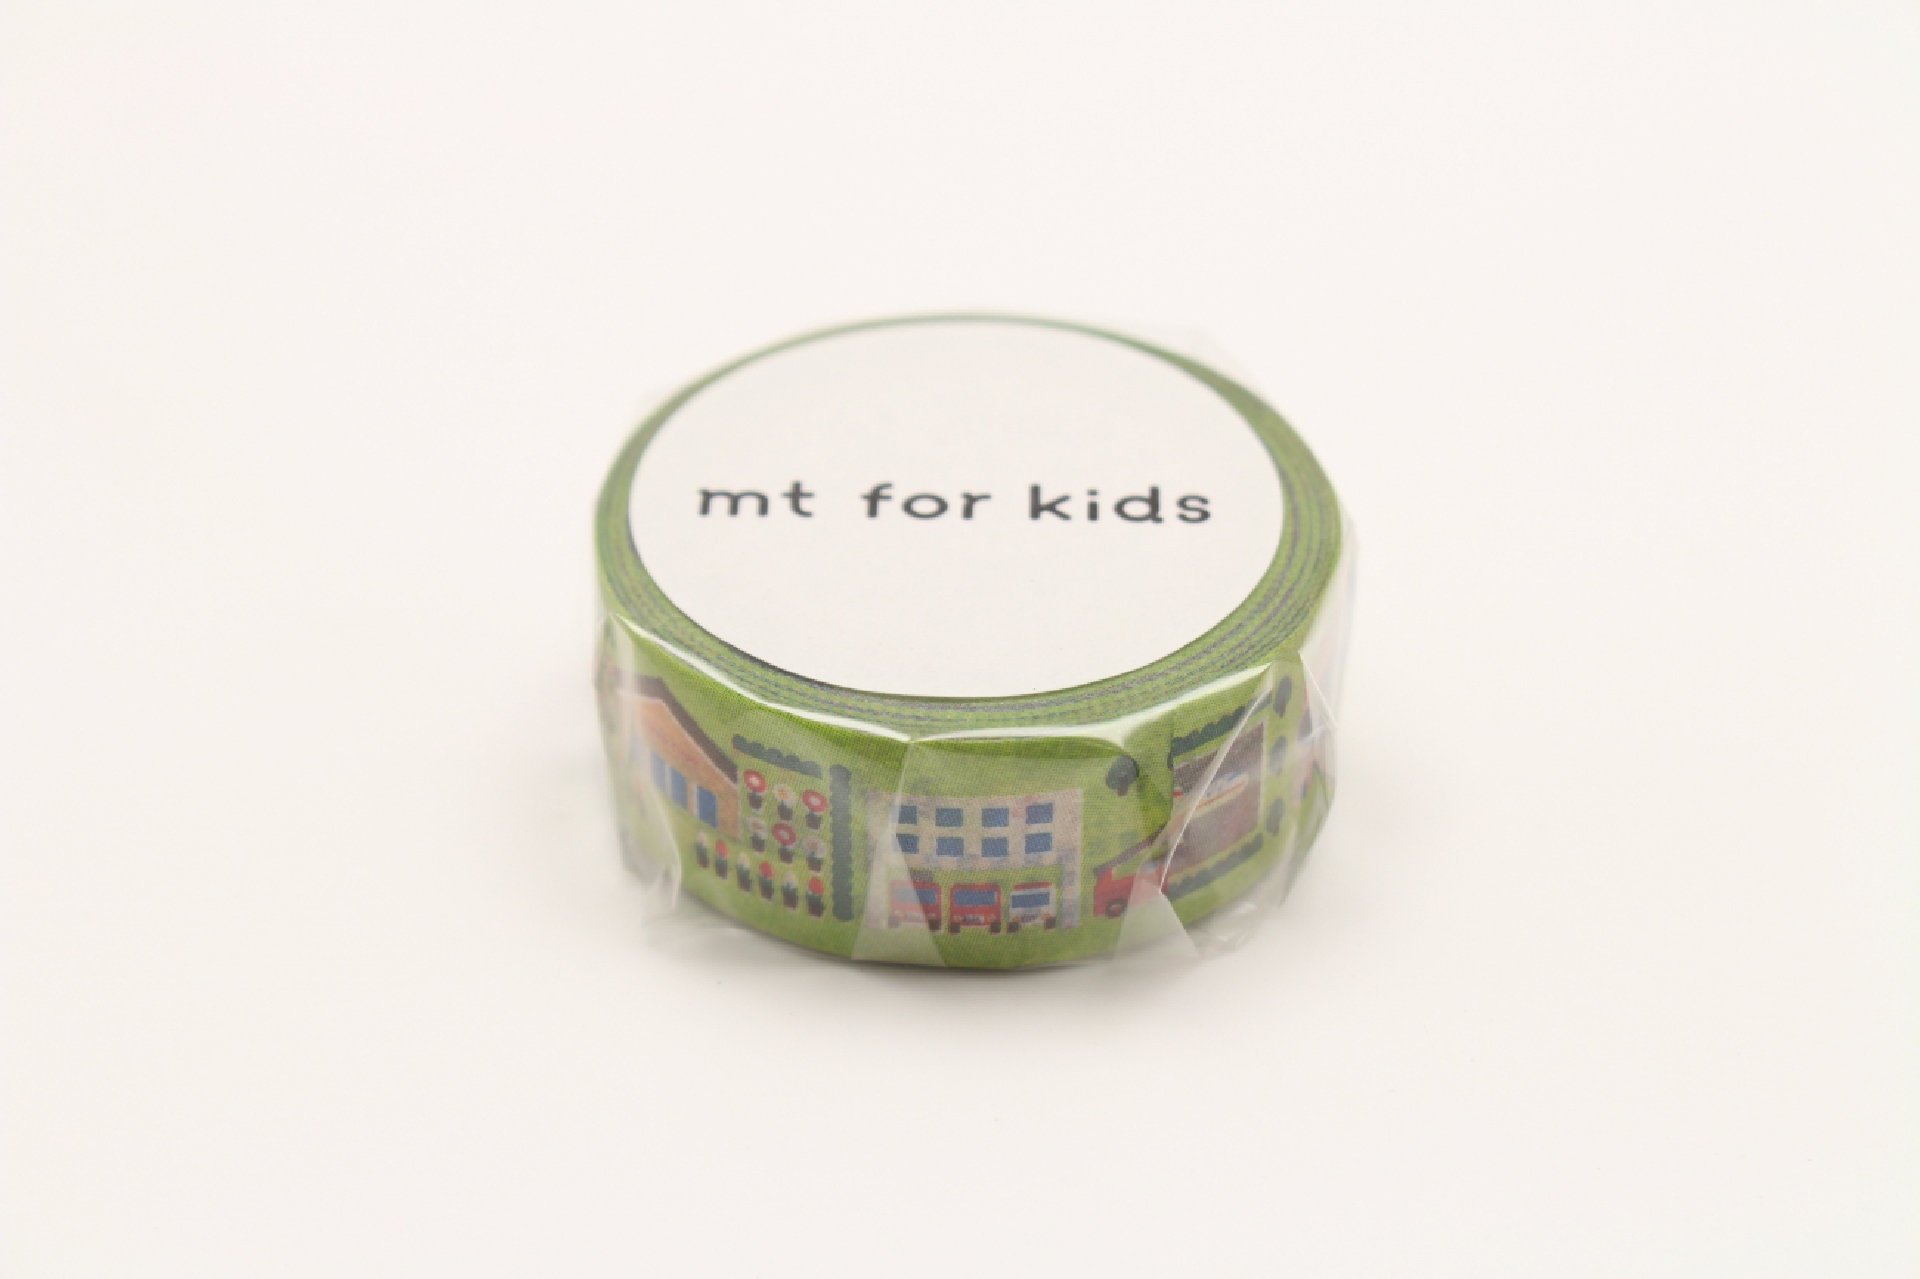 mt for kids work・まち | mt mt for kids | マスキングテープ「mt